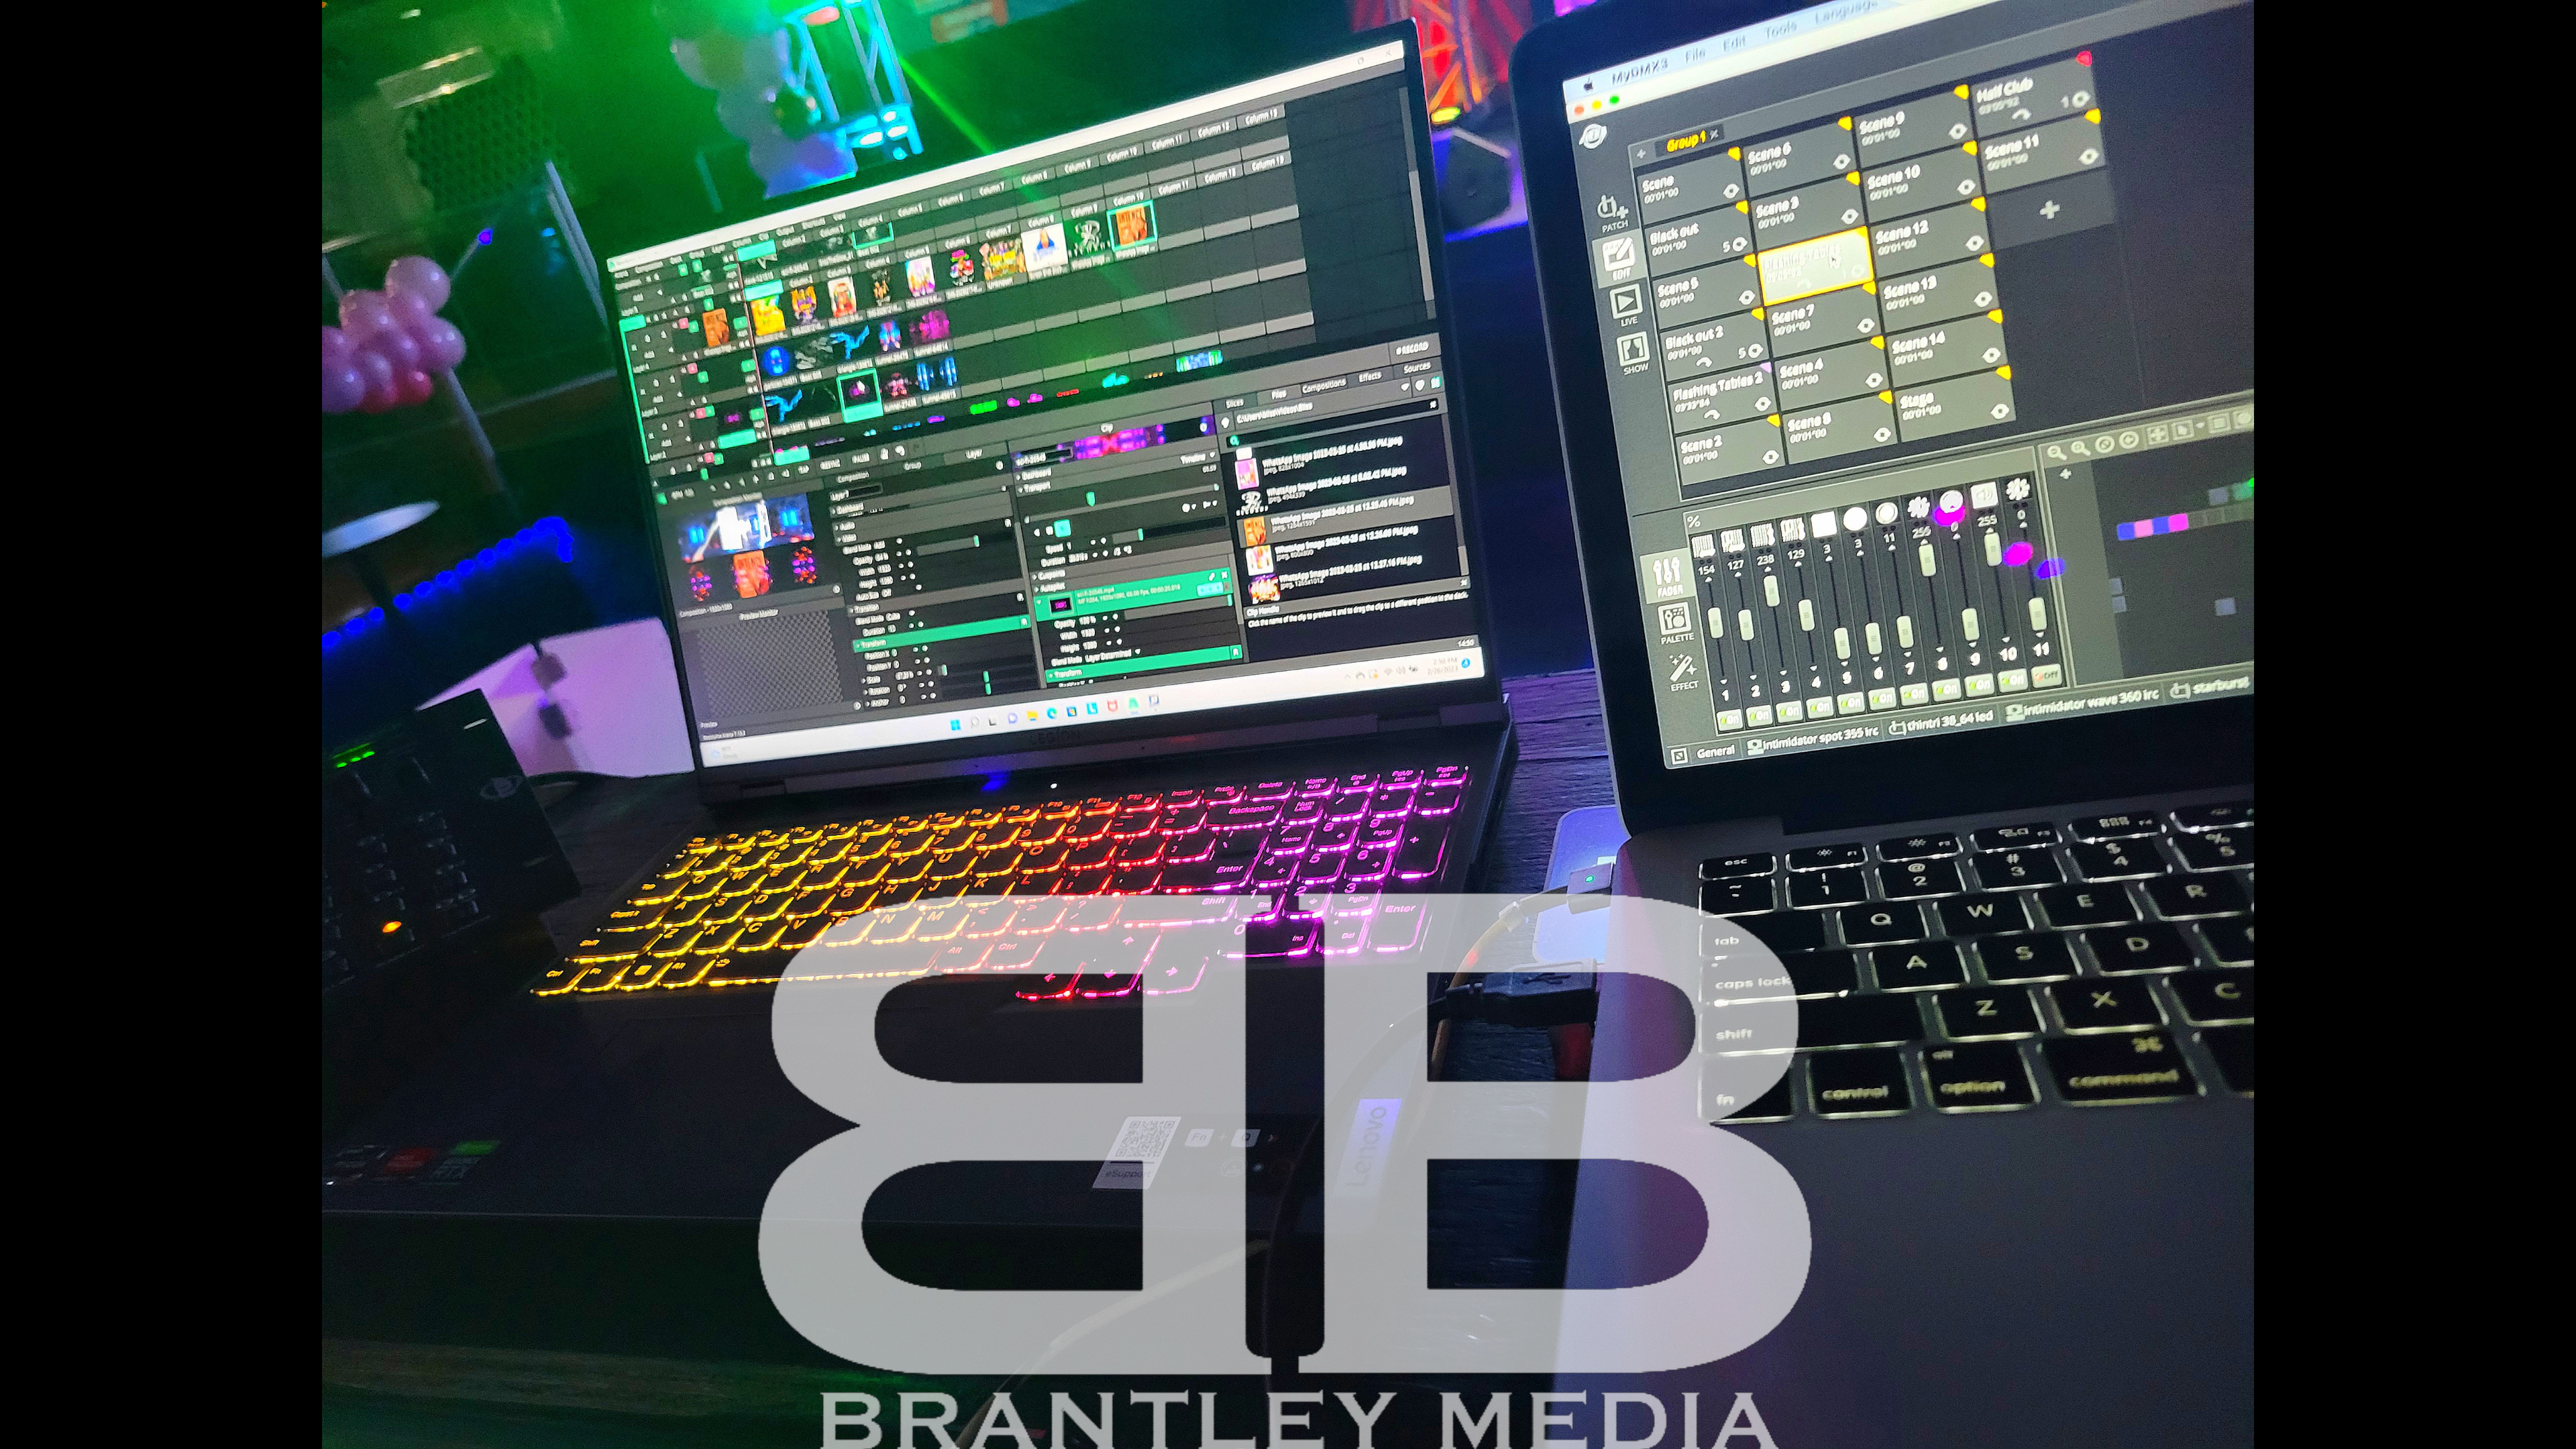 Video Editing laptop with Brantley Media logo